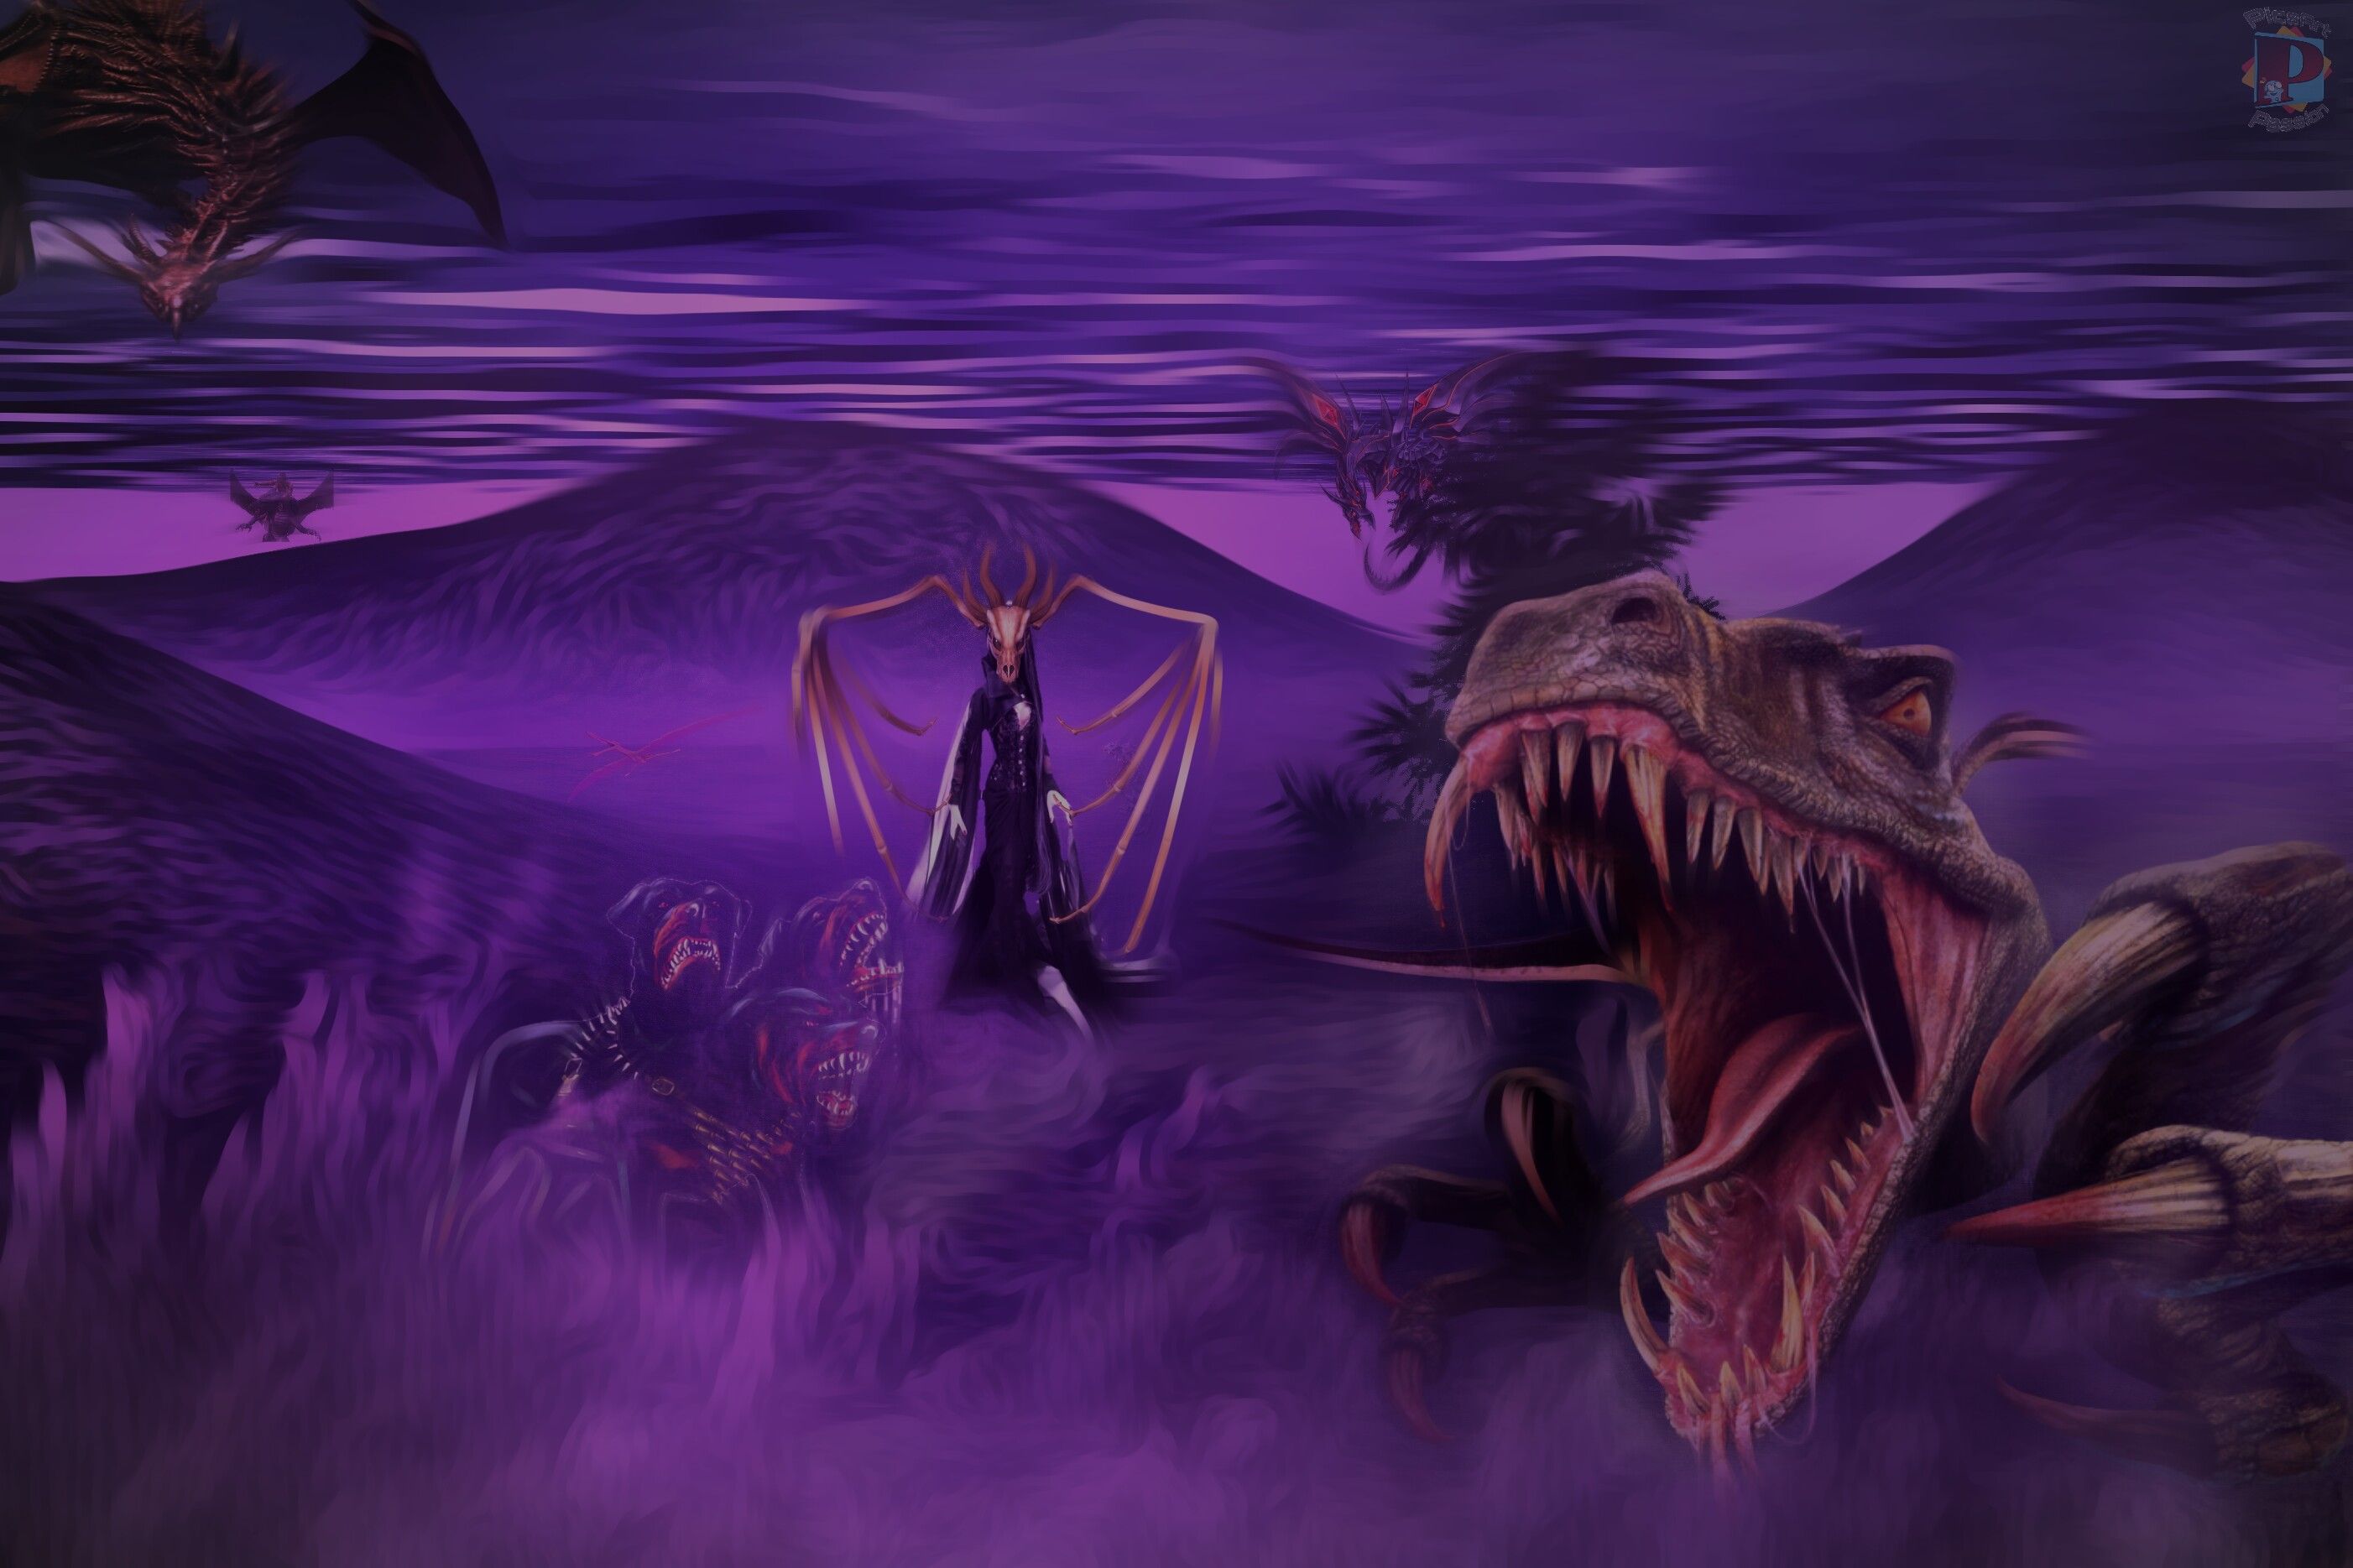 Wallpaper 'Dragon Land' MadeWithPicsArt fantasyart fan